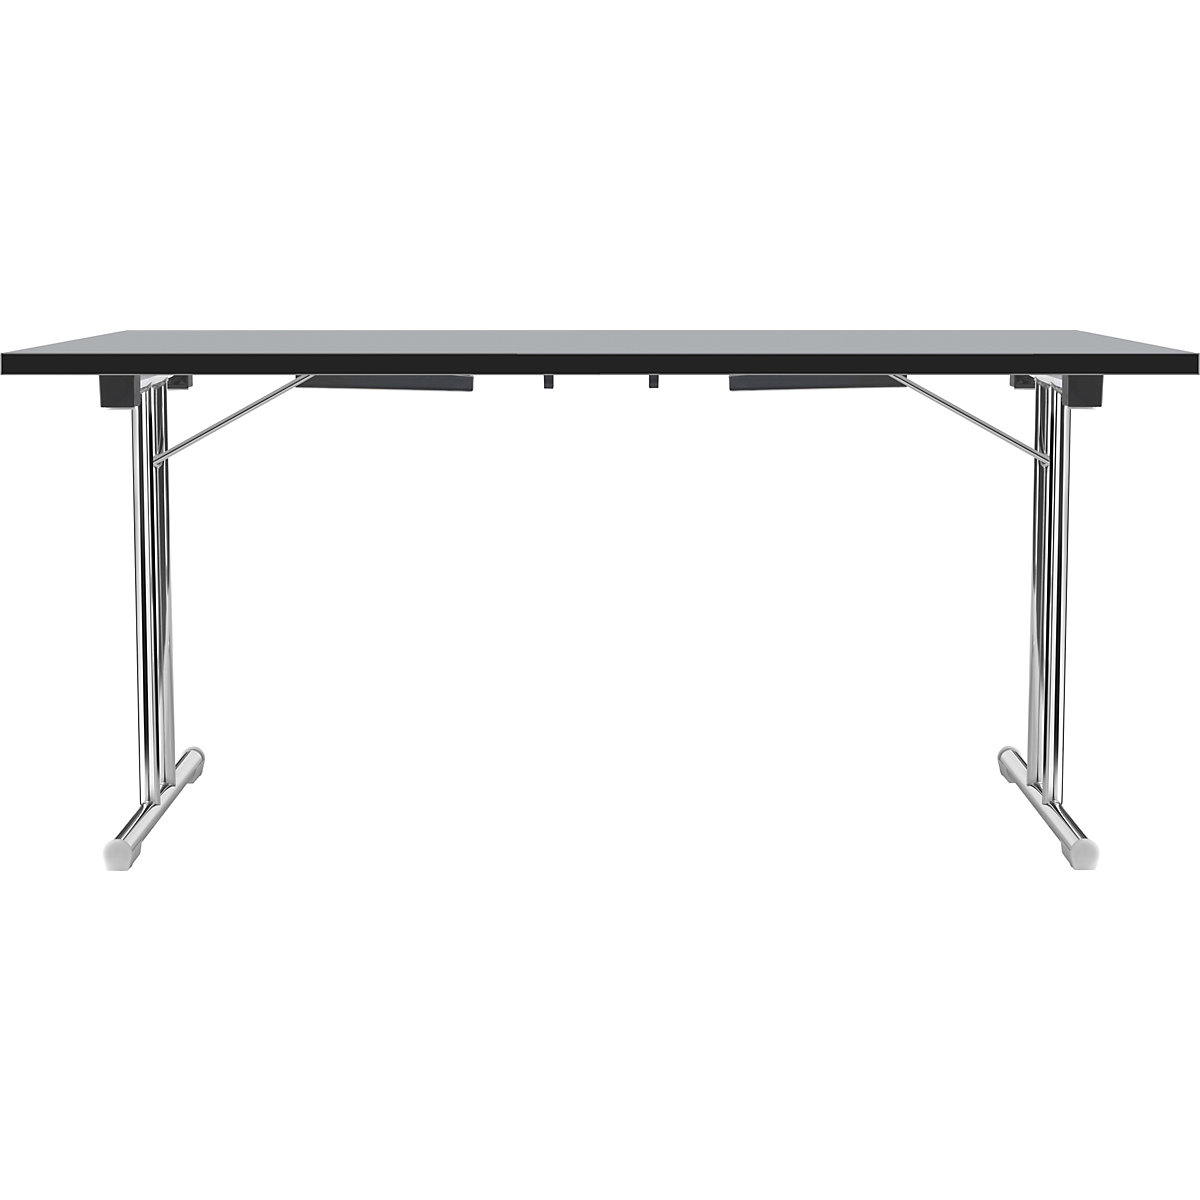 Folding table with double T base, tubular steel frame, chrome plated, light grey/black, WxD 1400 x 700 mm-7